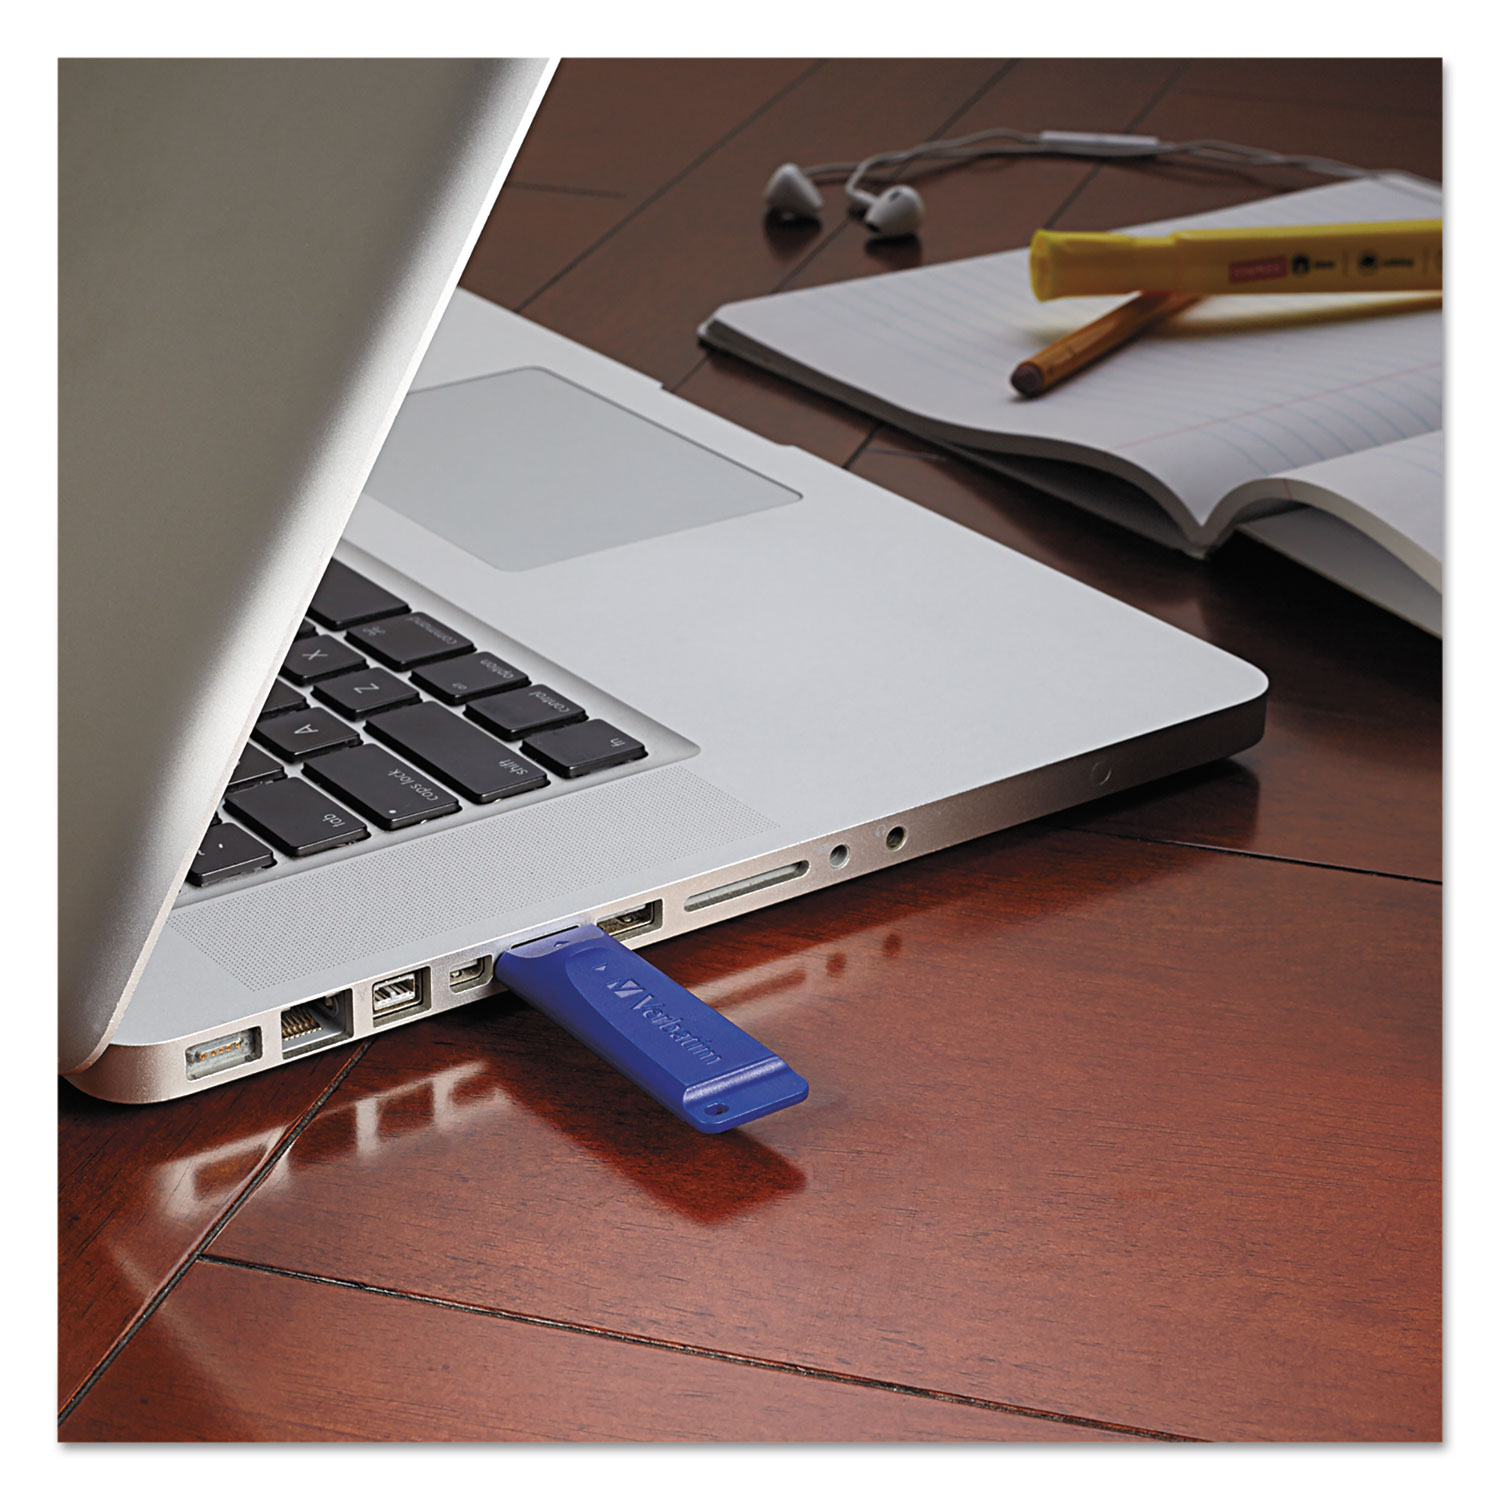 Verbatim Smart 32GB USB 2.0 Flash Drive Model 97408 - image 3 of 4